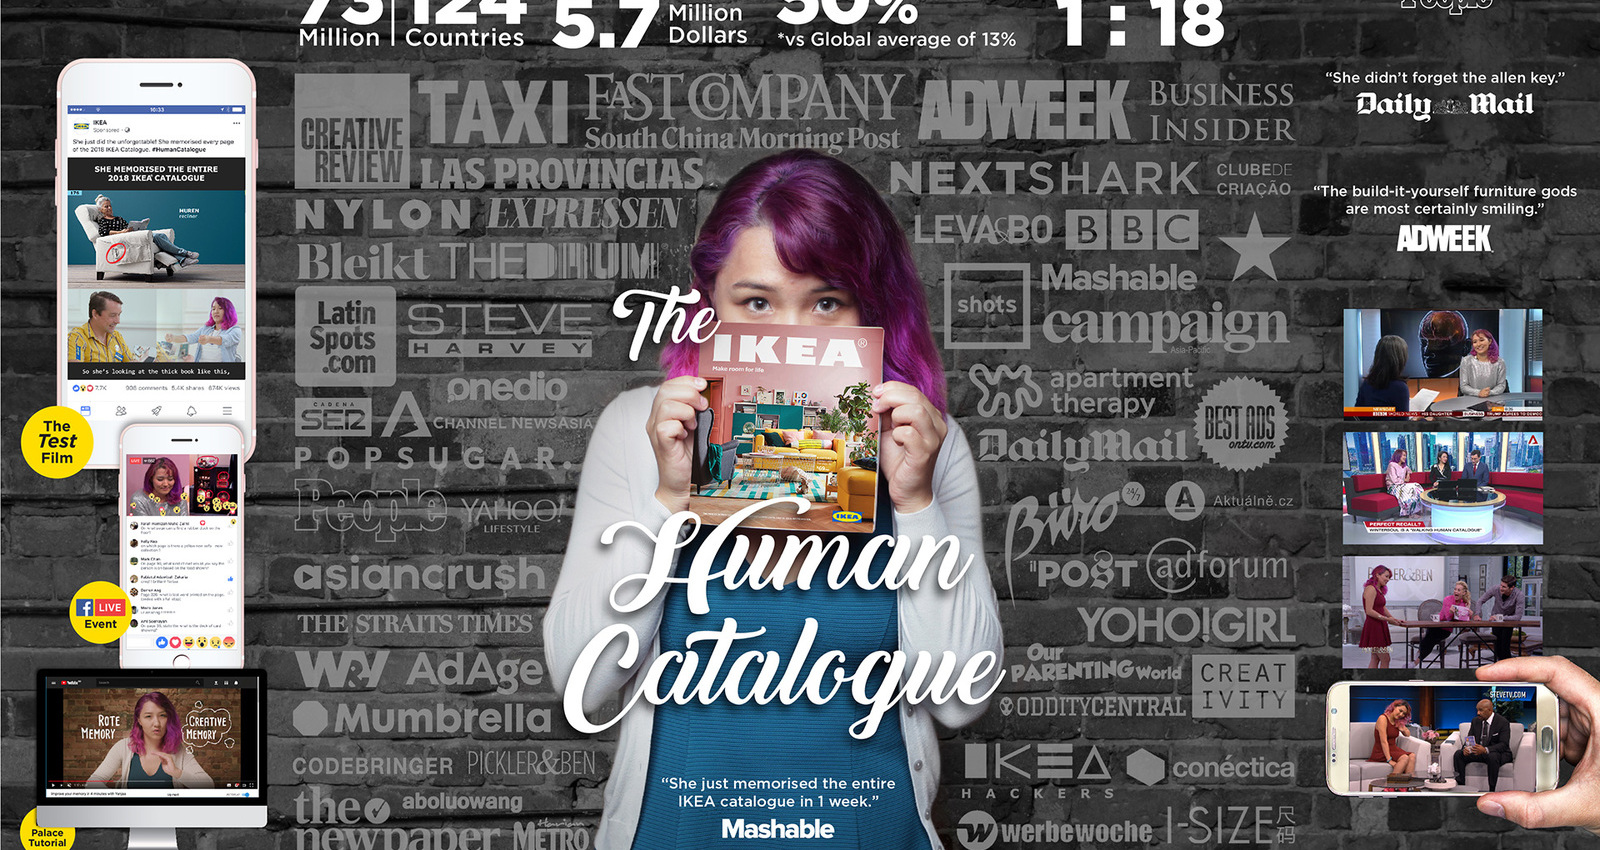 The IKEA Human Catalogue